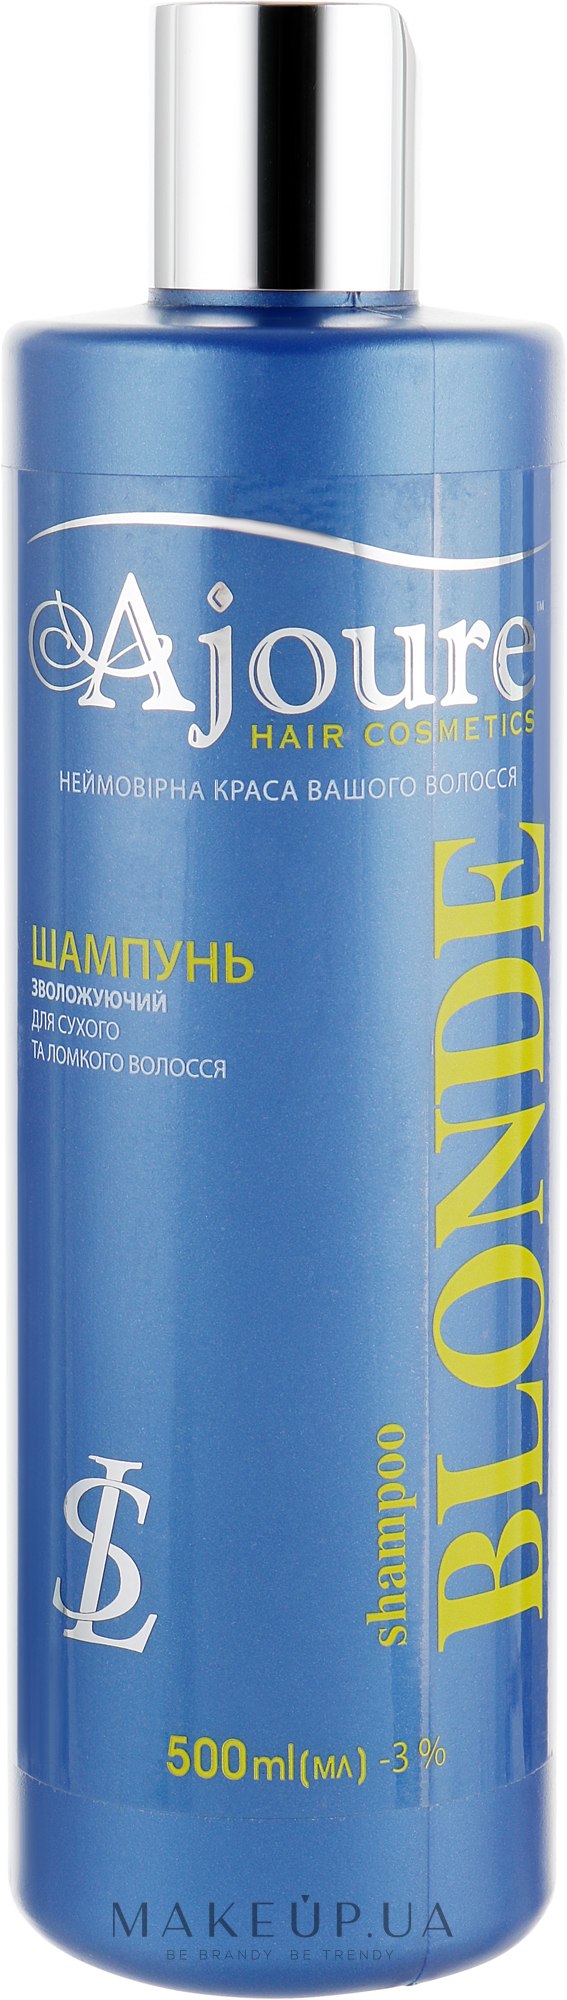 Увлажняющий шампунь для сухих и ломких волос - Ajoure Blonde Shampoo — фото 500ml